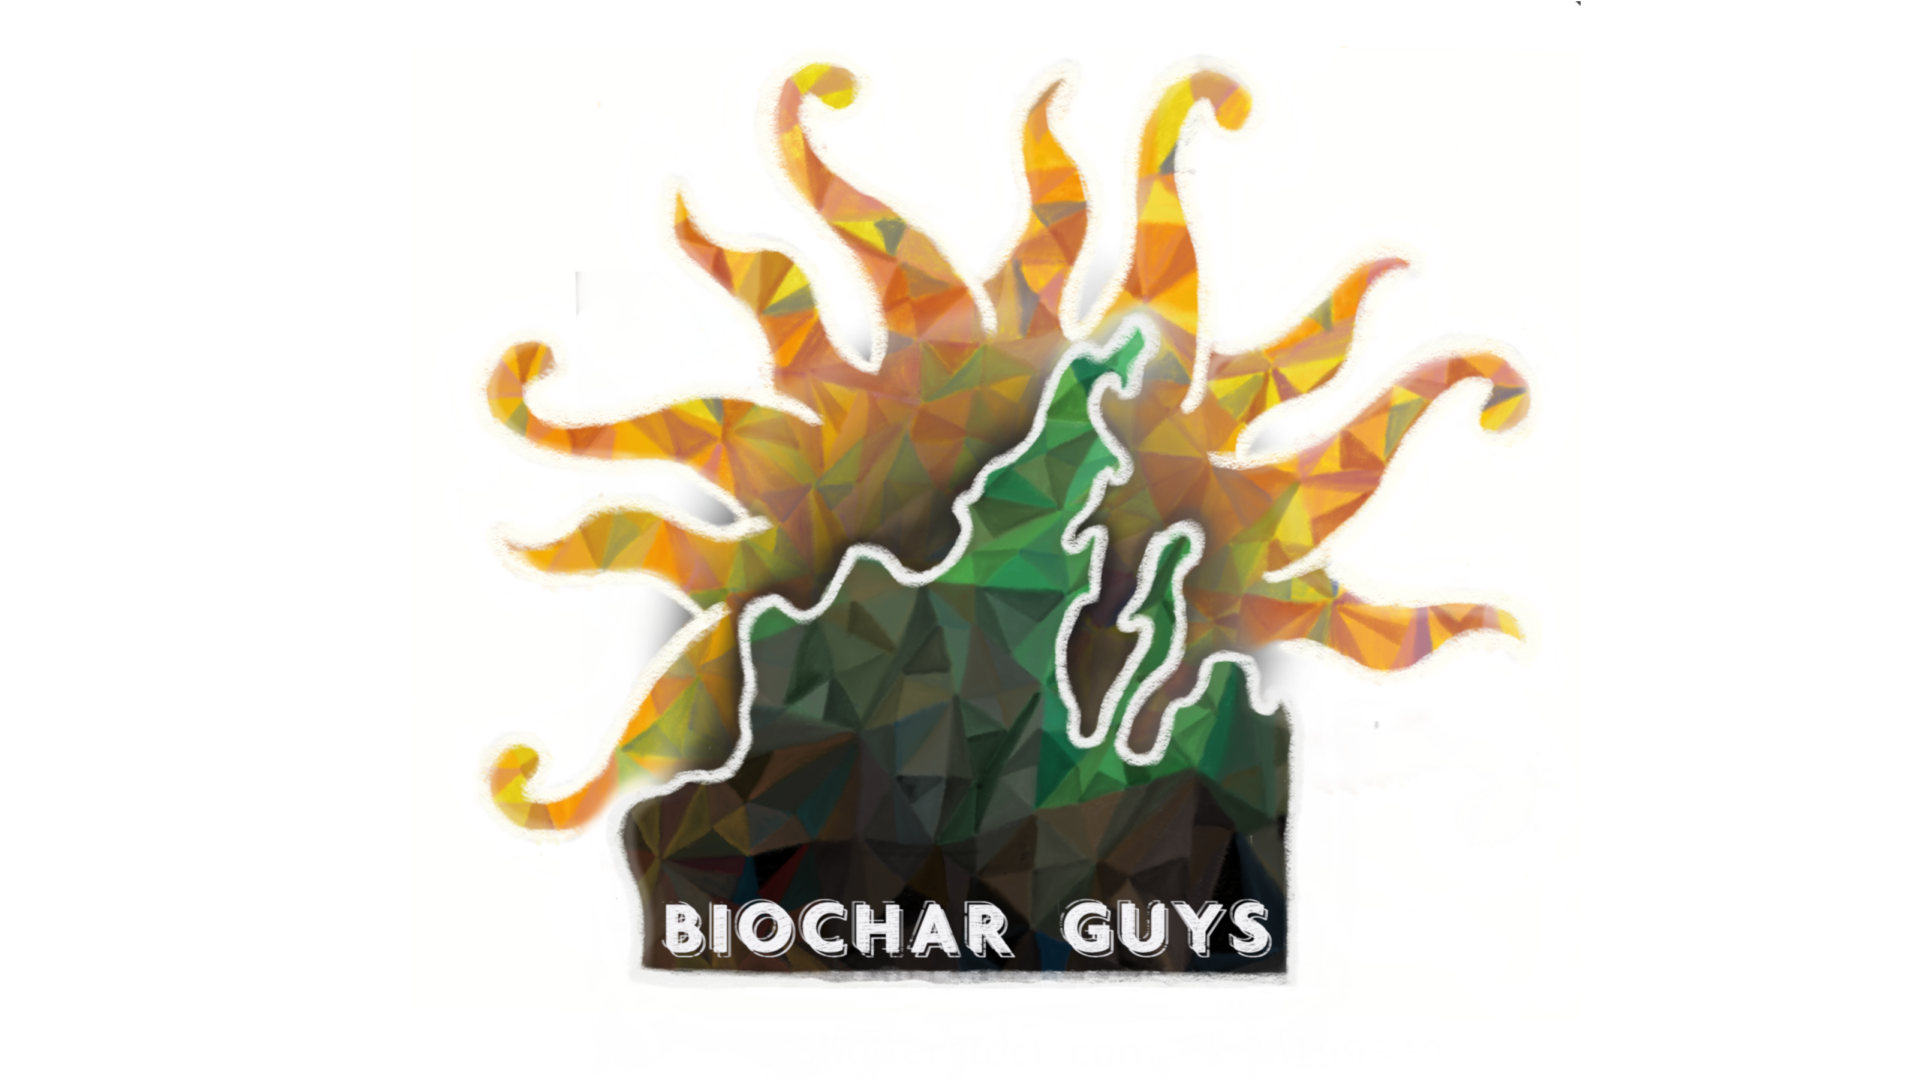 The BioChar Guys